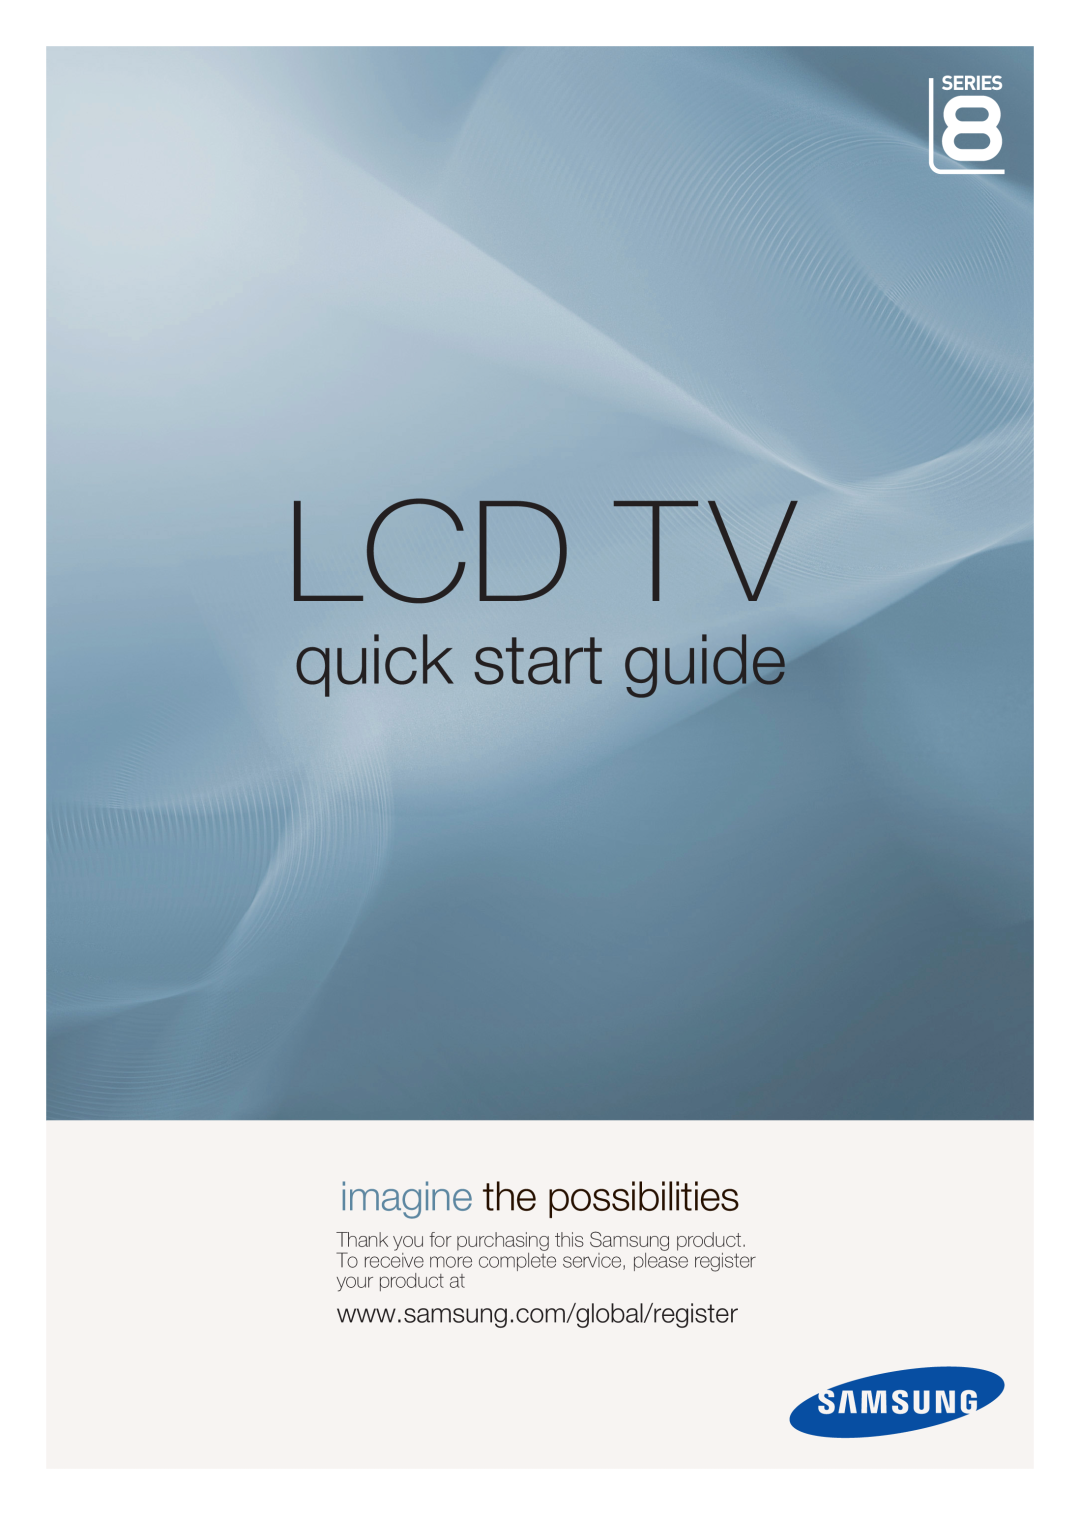 Samsung LA46A850S1R quick start Lcd Tv, quick start guide, imagine the possibilities 